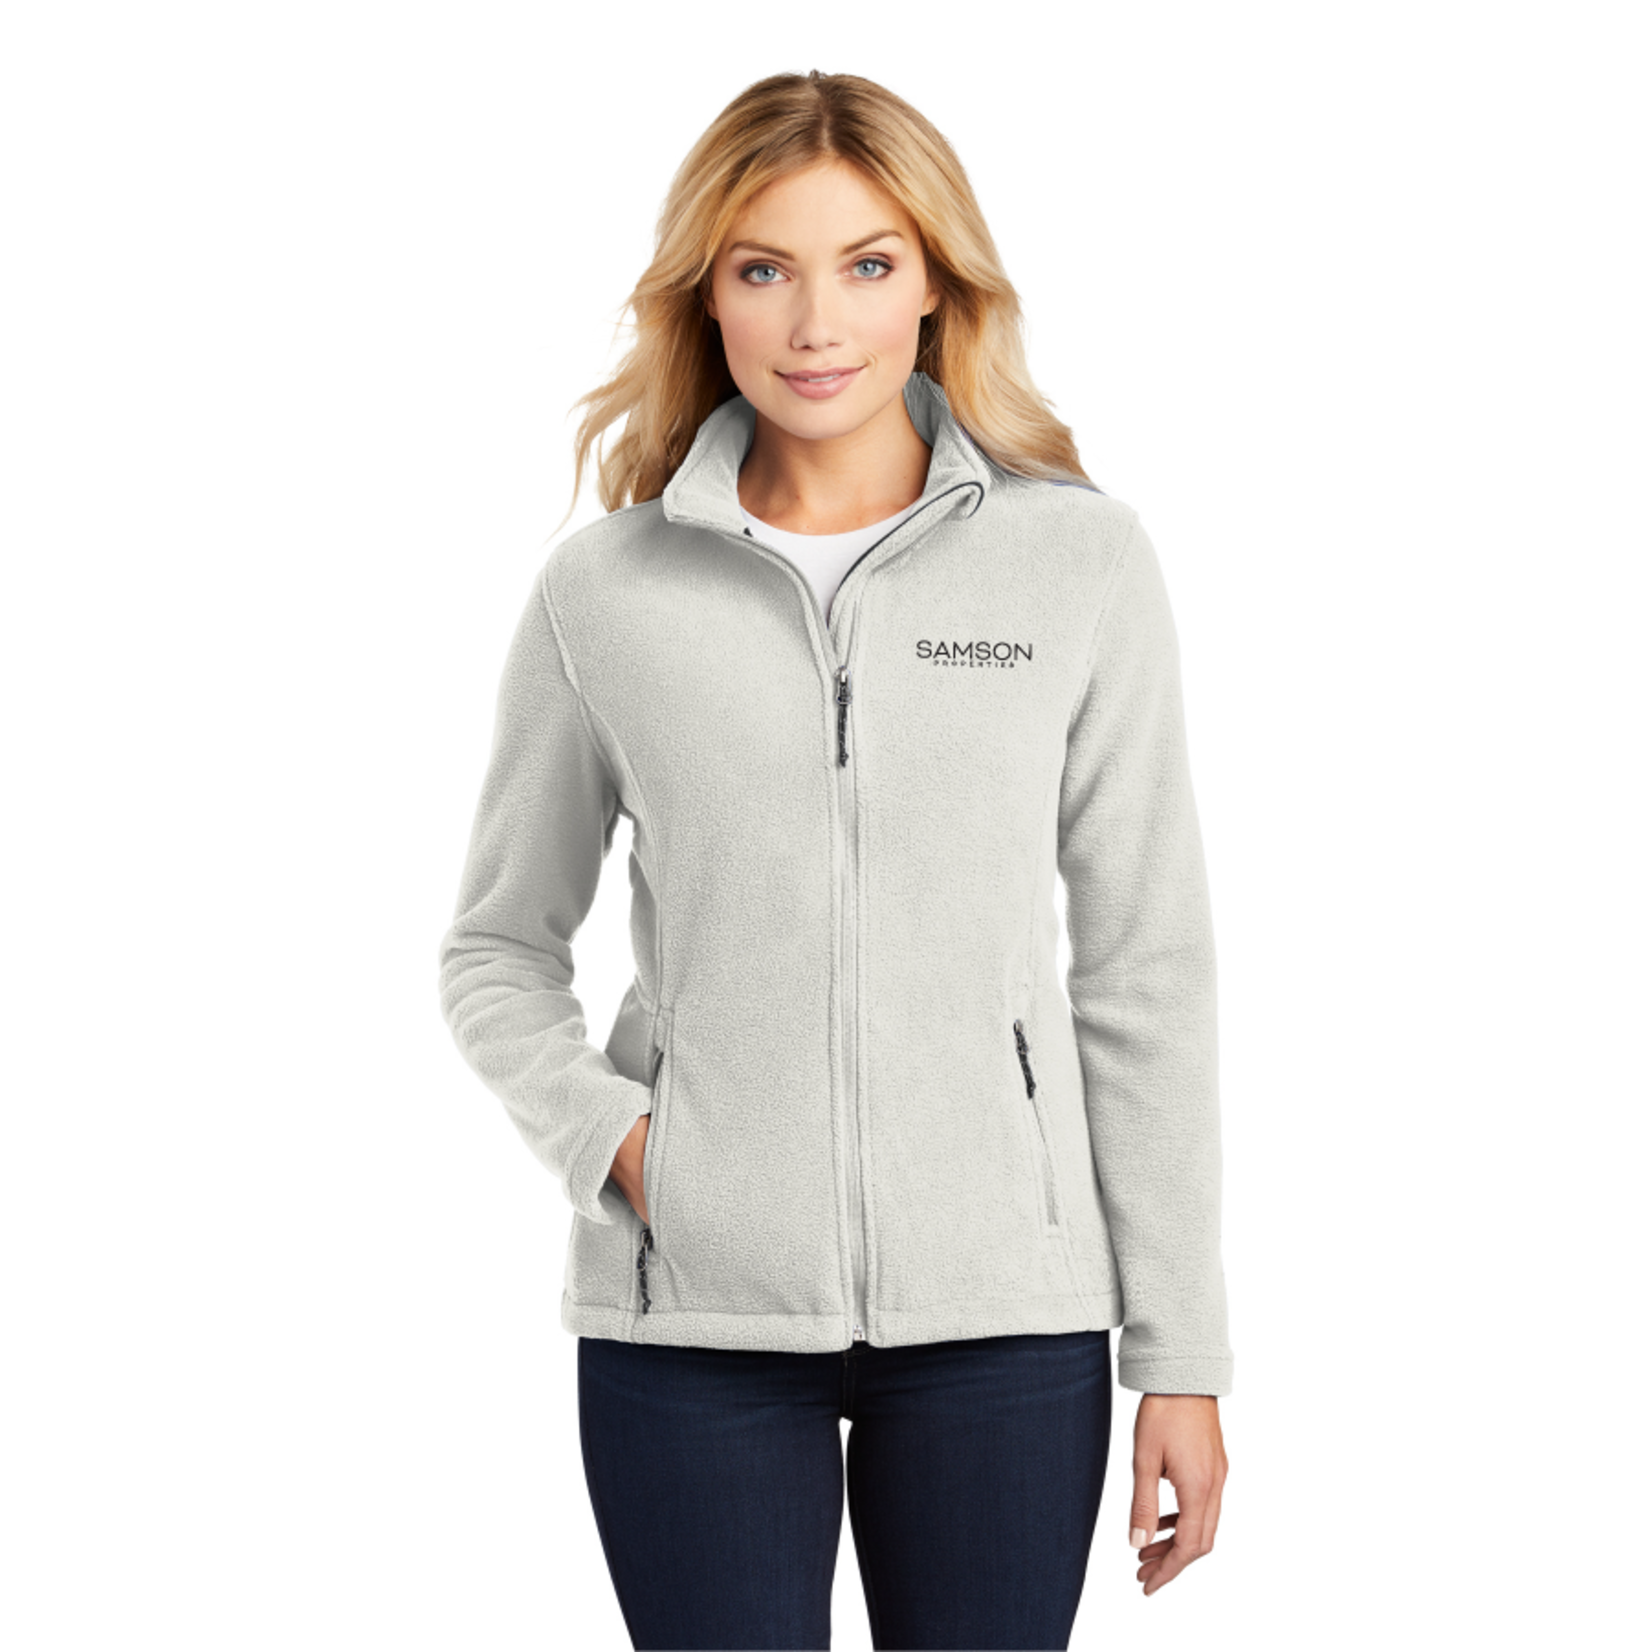 L217 - Port Authority Ladies Value Fleece Jacket - NVA Signs and